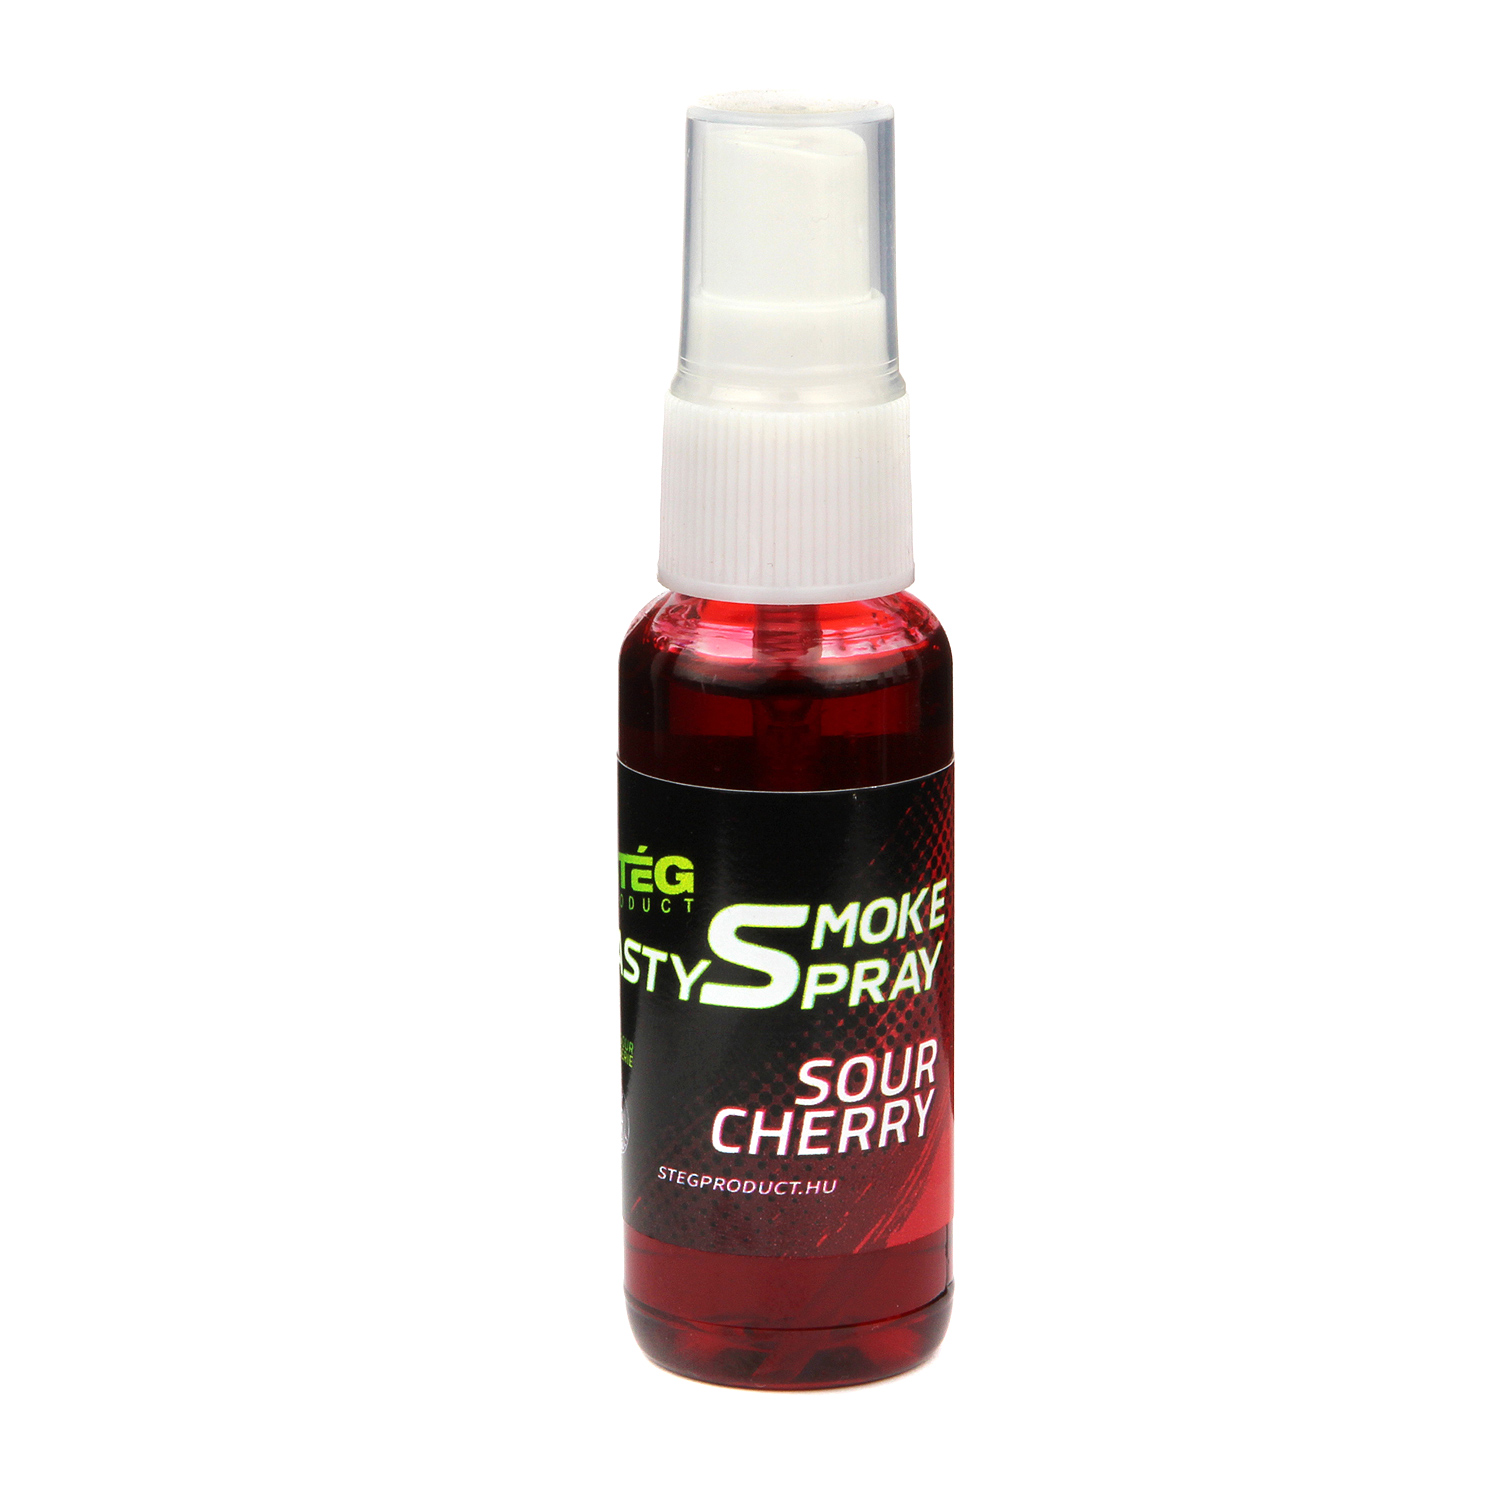 Stg Tasty Smoke Spray Sour Cherry 30ml